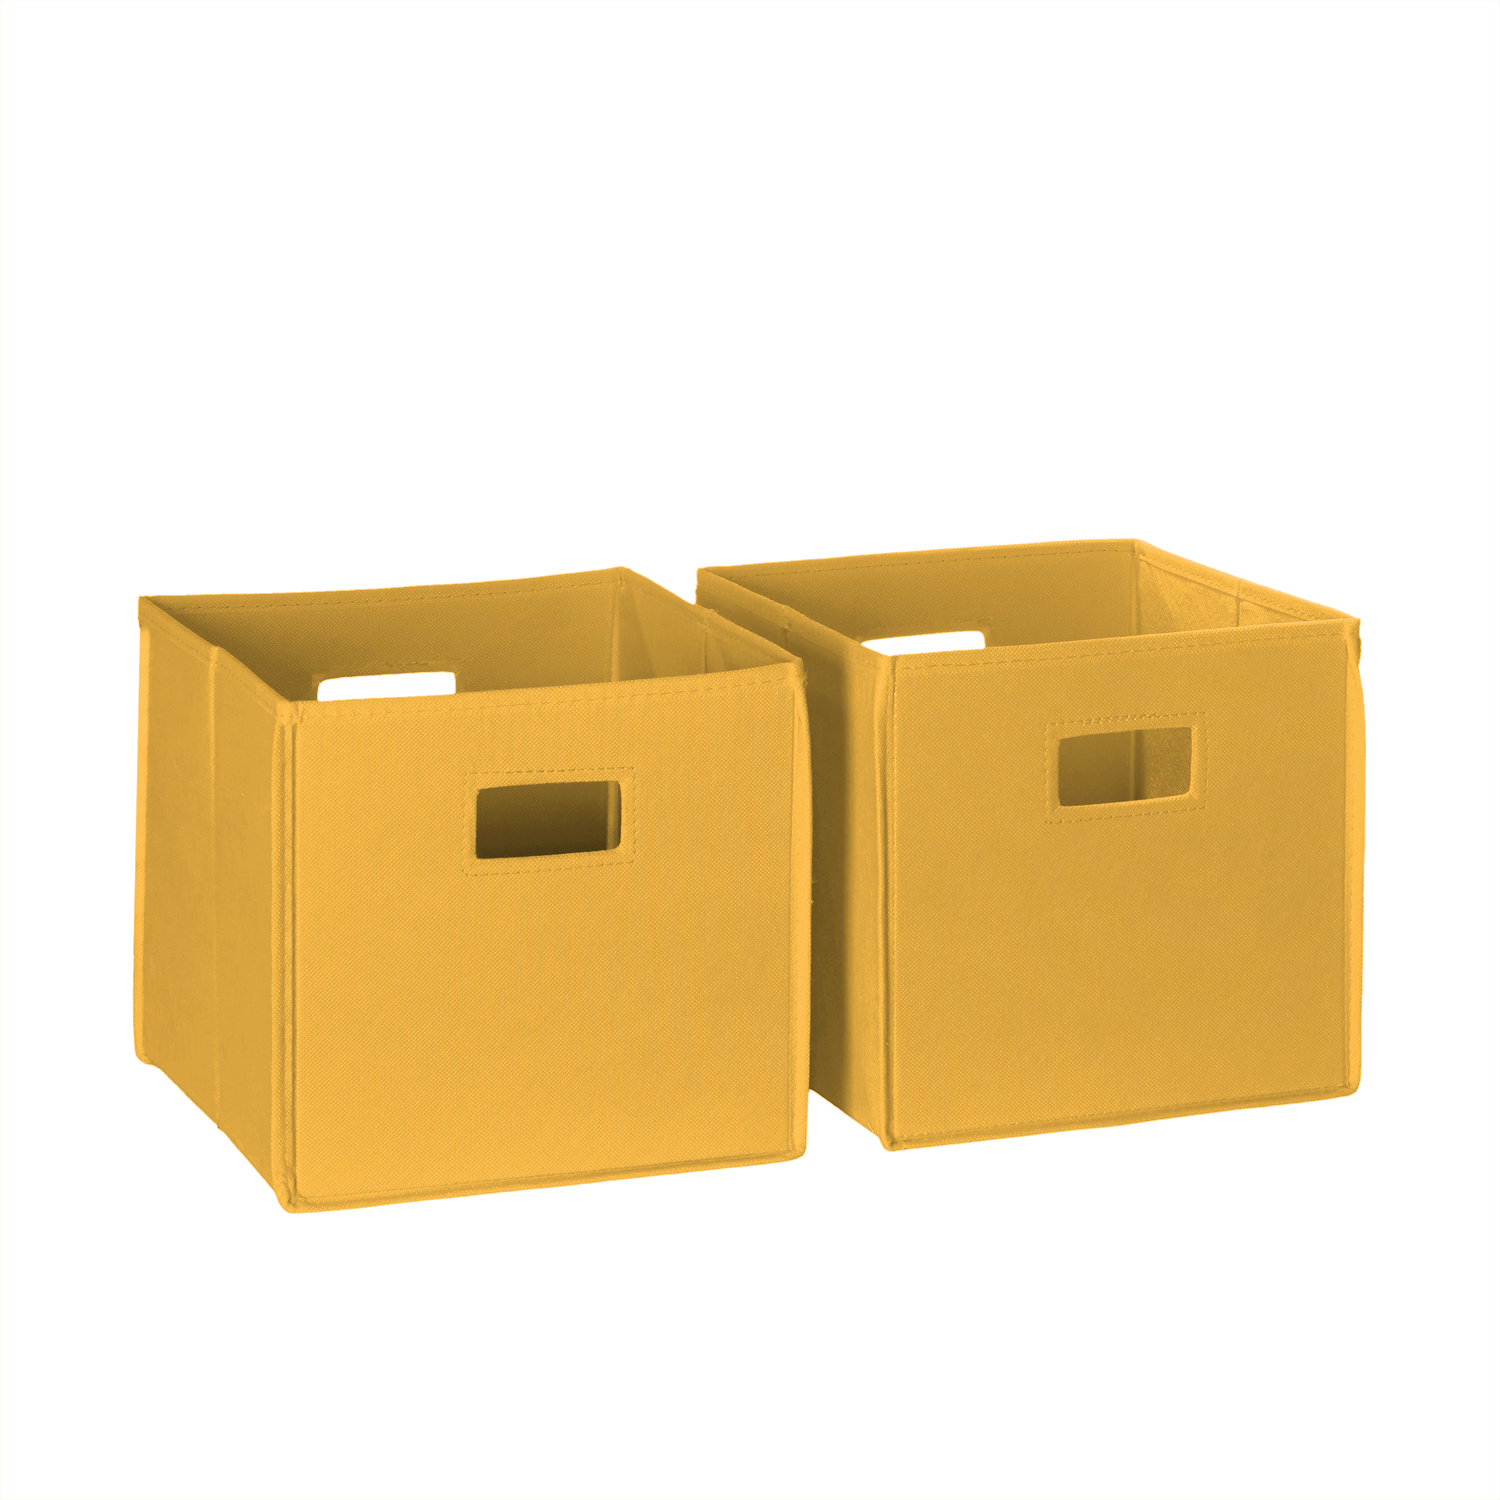 RiverRidge Home Folding Fabric Cube Storage Bin Set of 2 - Yellow - image 1 of 14